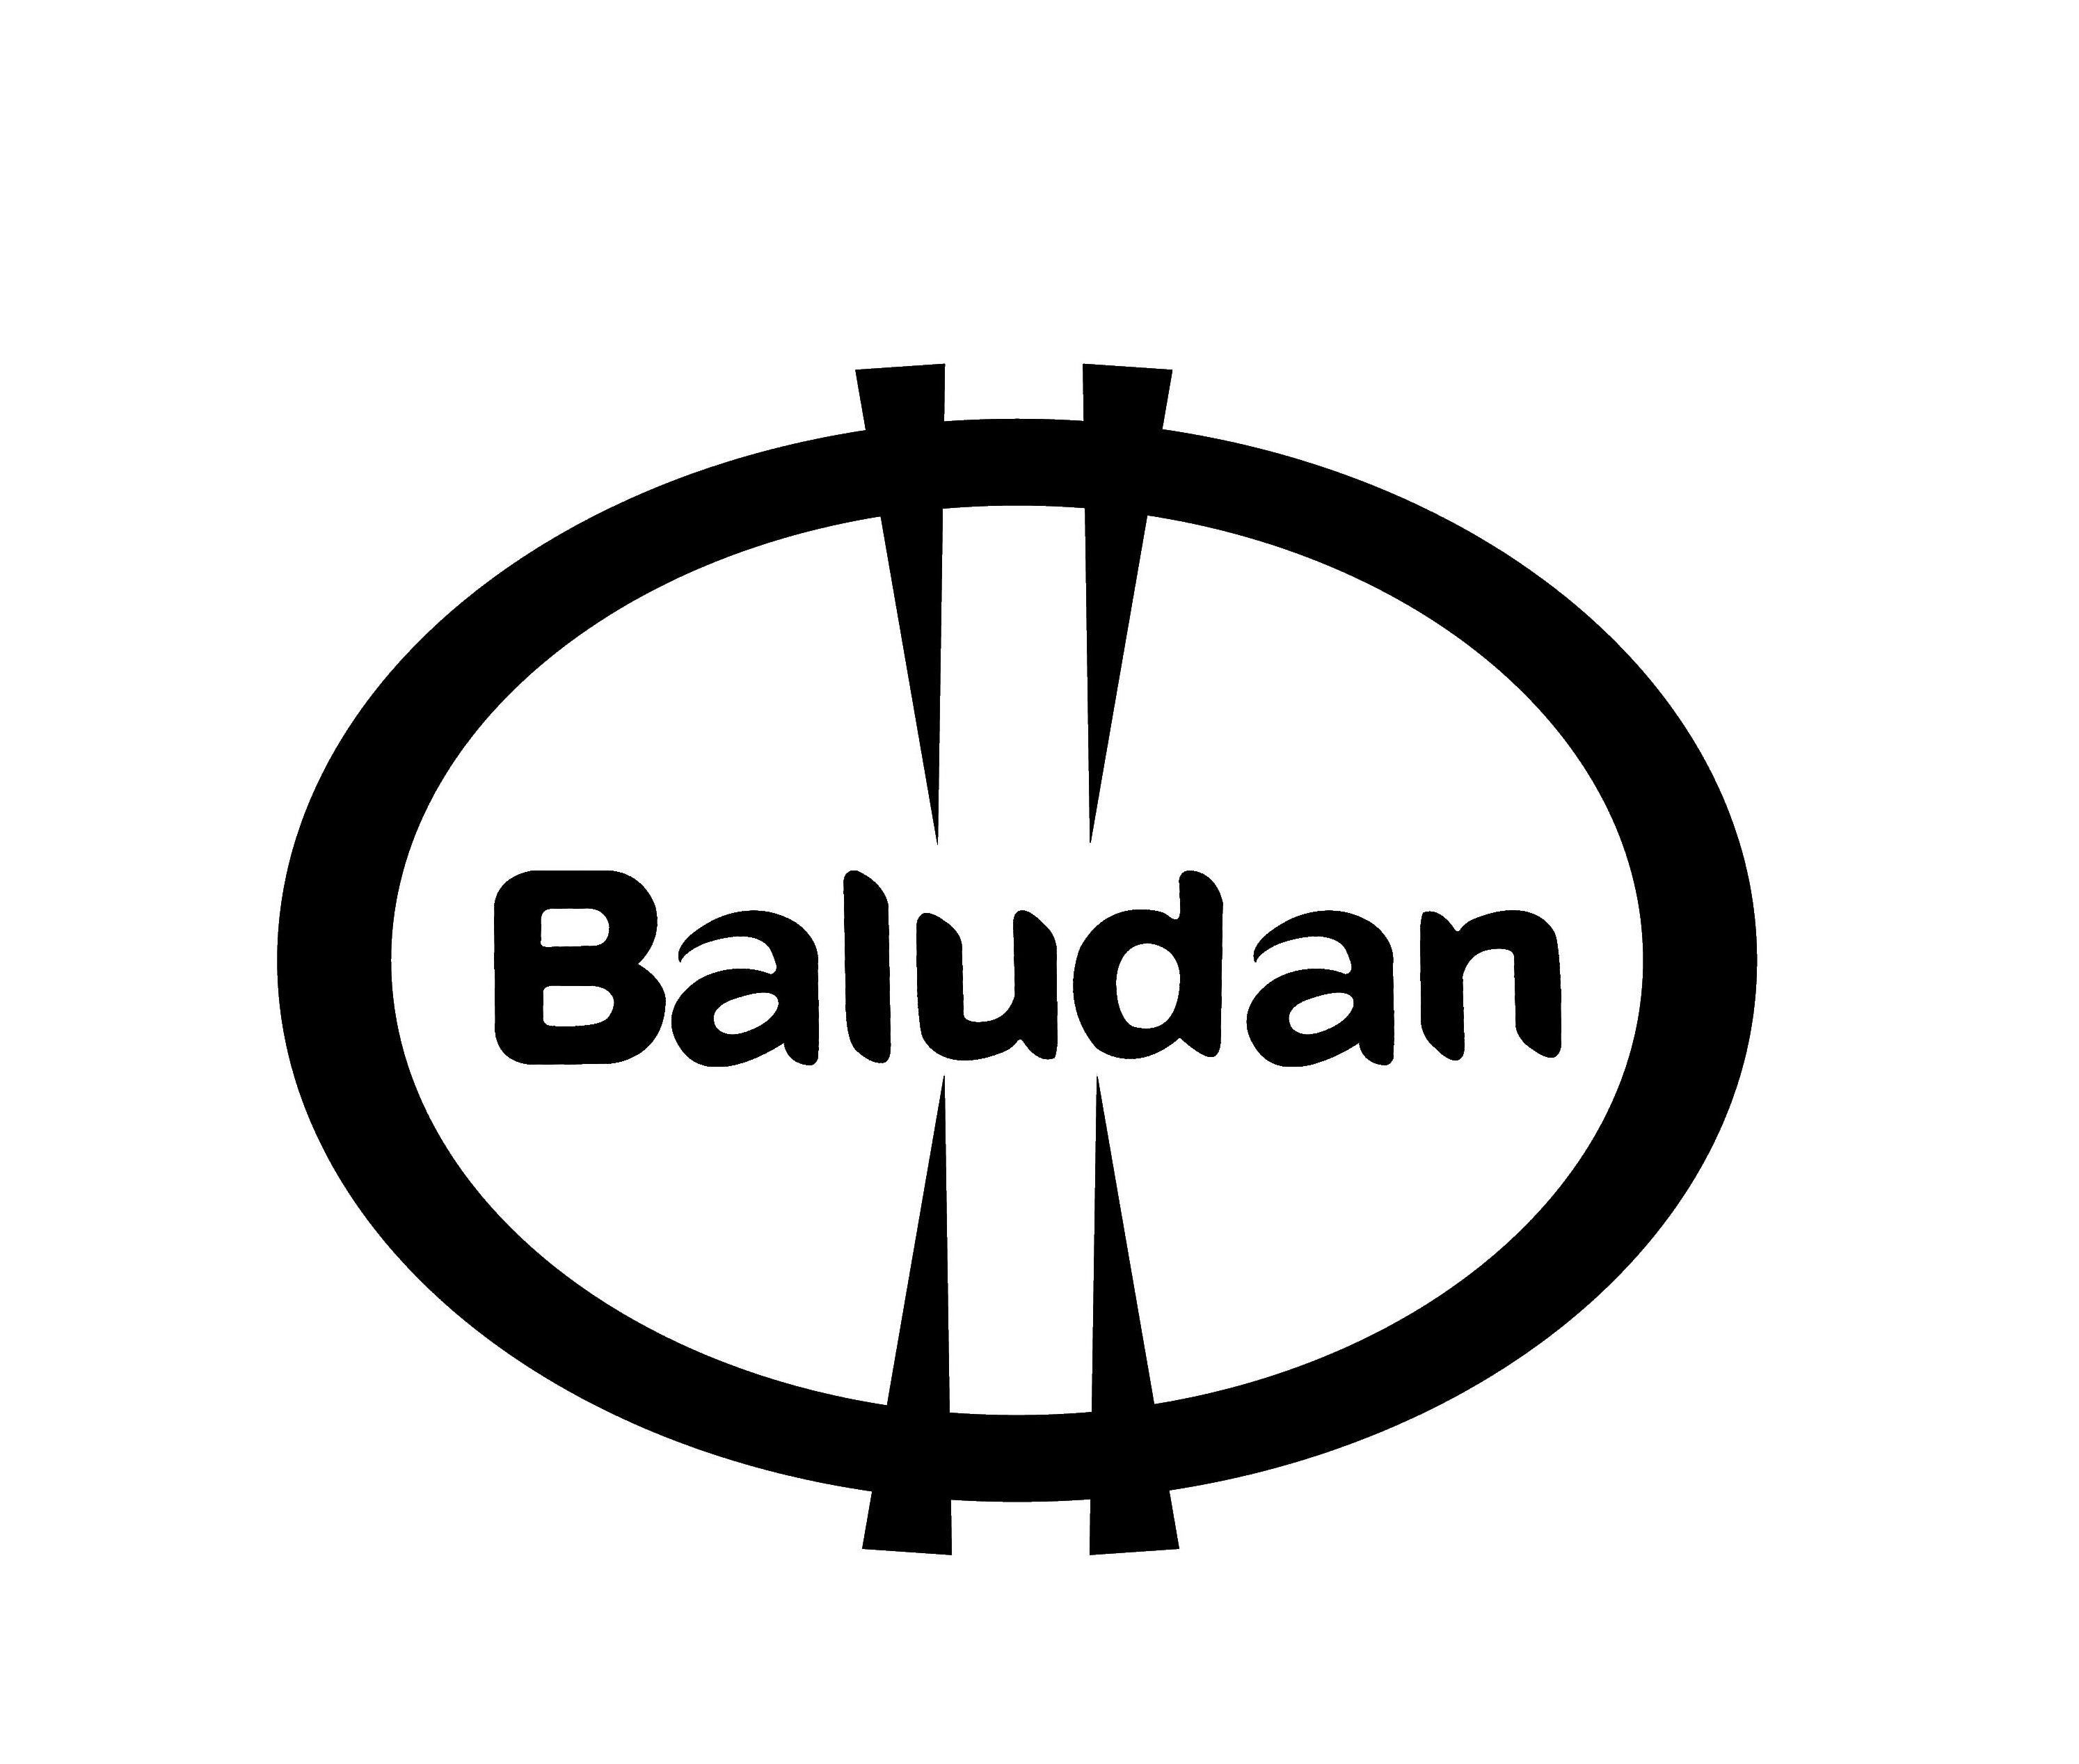  BALUDAN